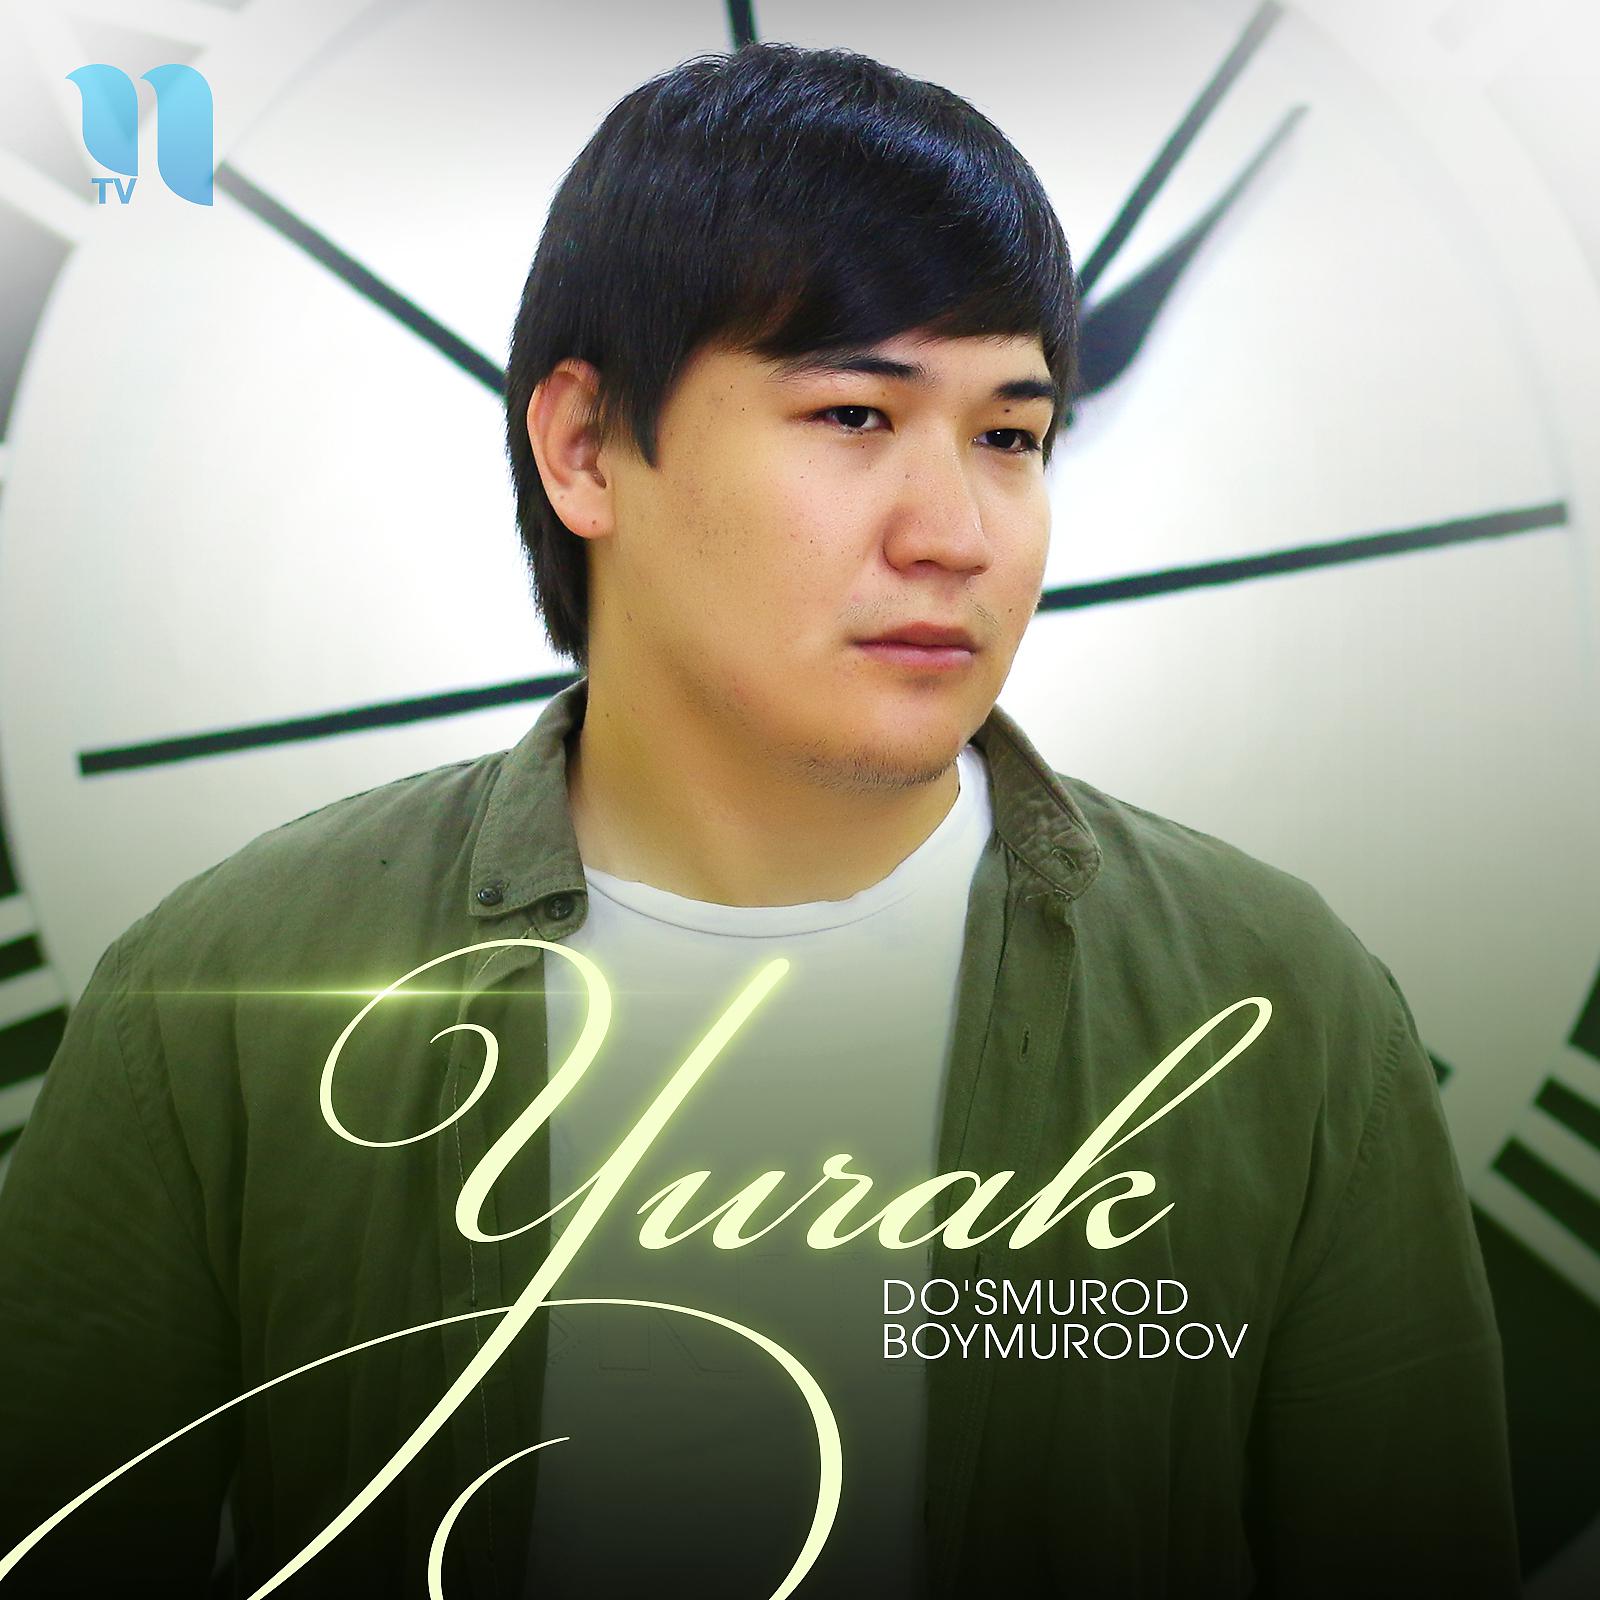 Постер альбома Yurak